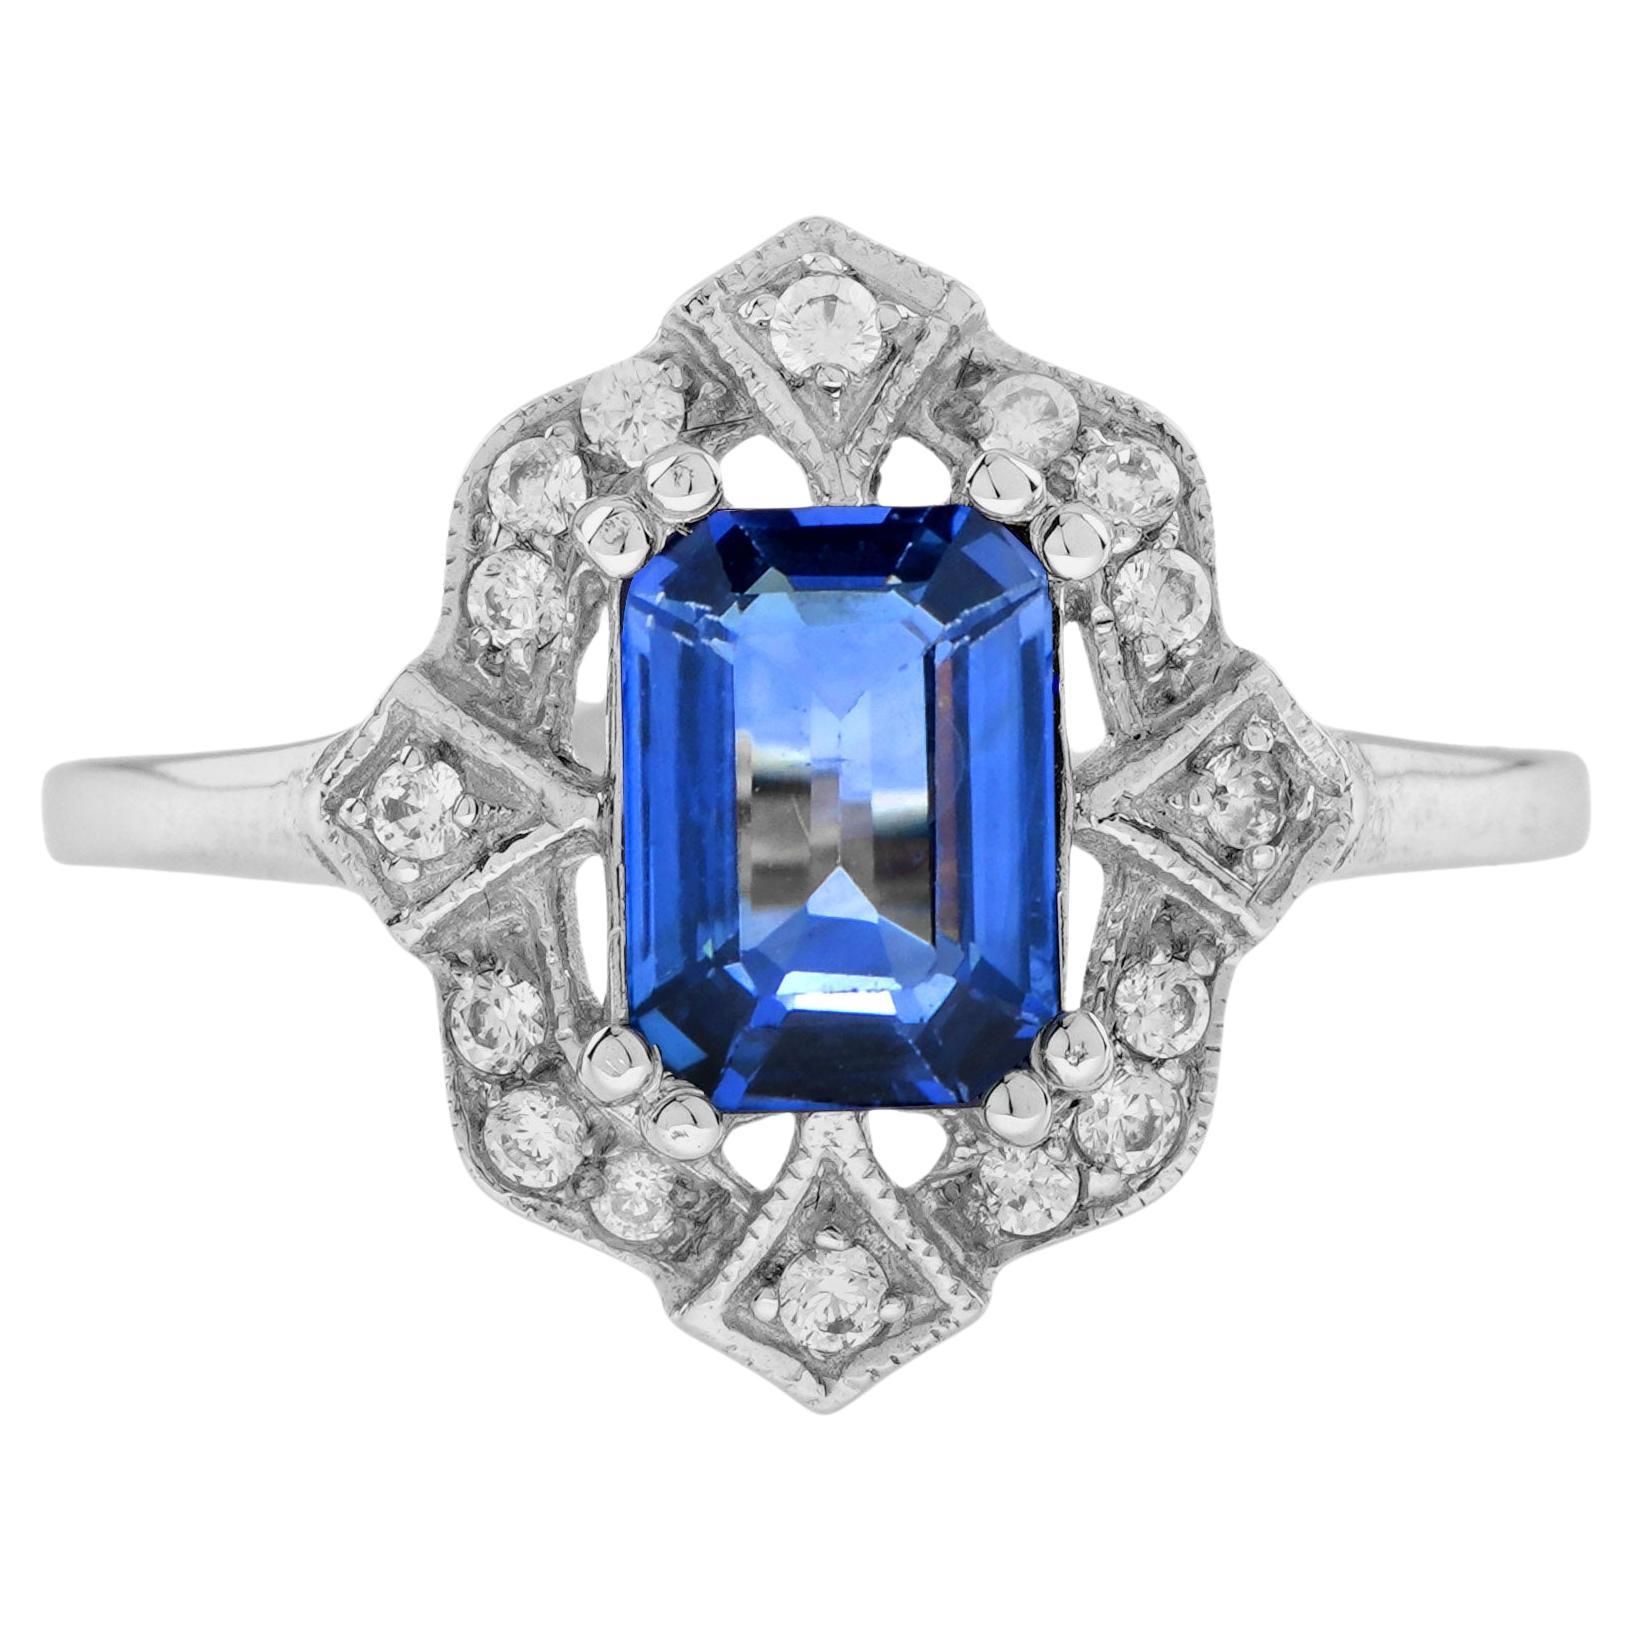 Emerald Cut Ceylon Sapphire and Diamond Halo Ring in 18K White Gold